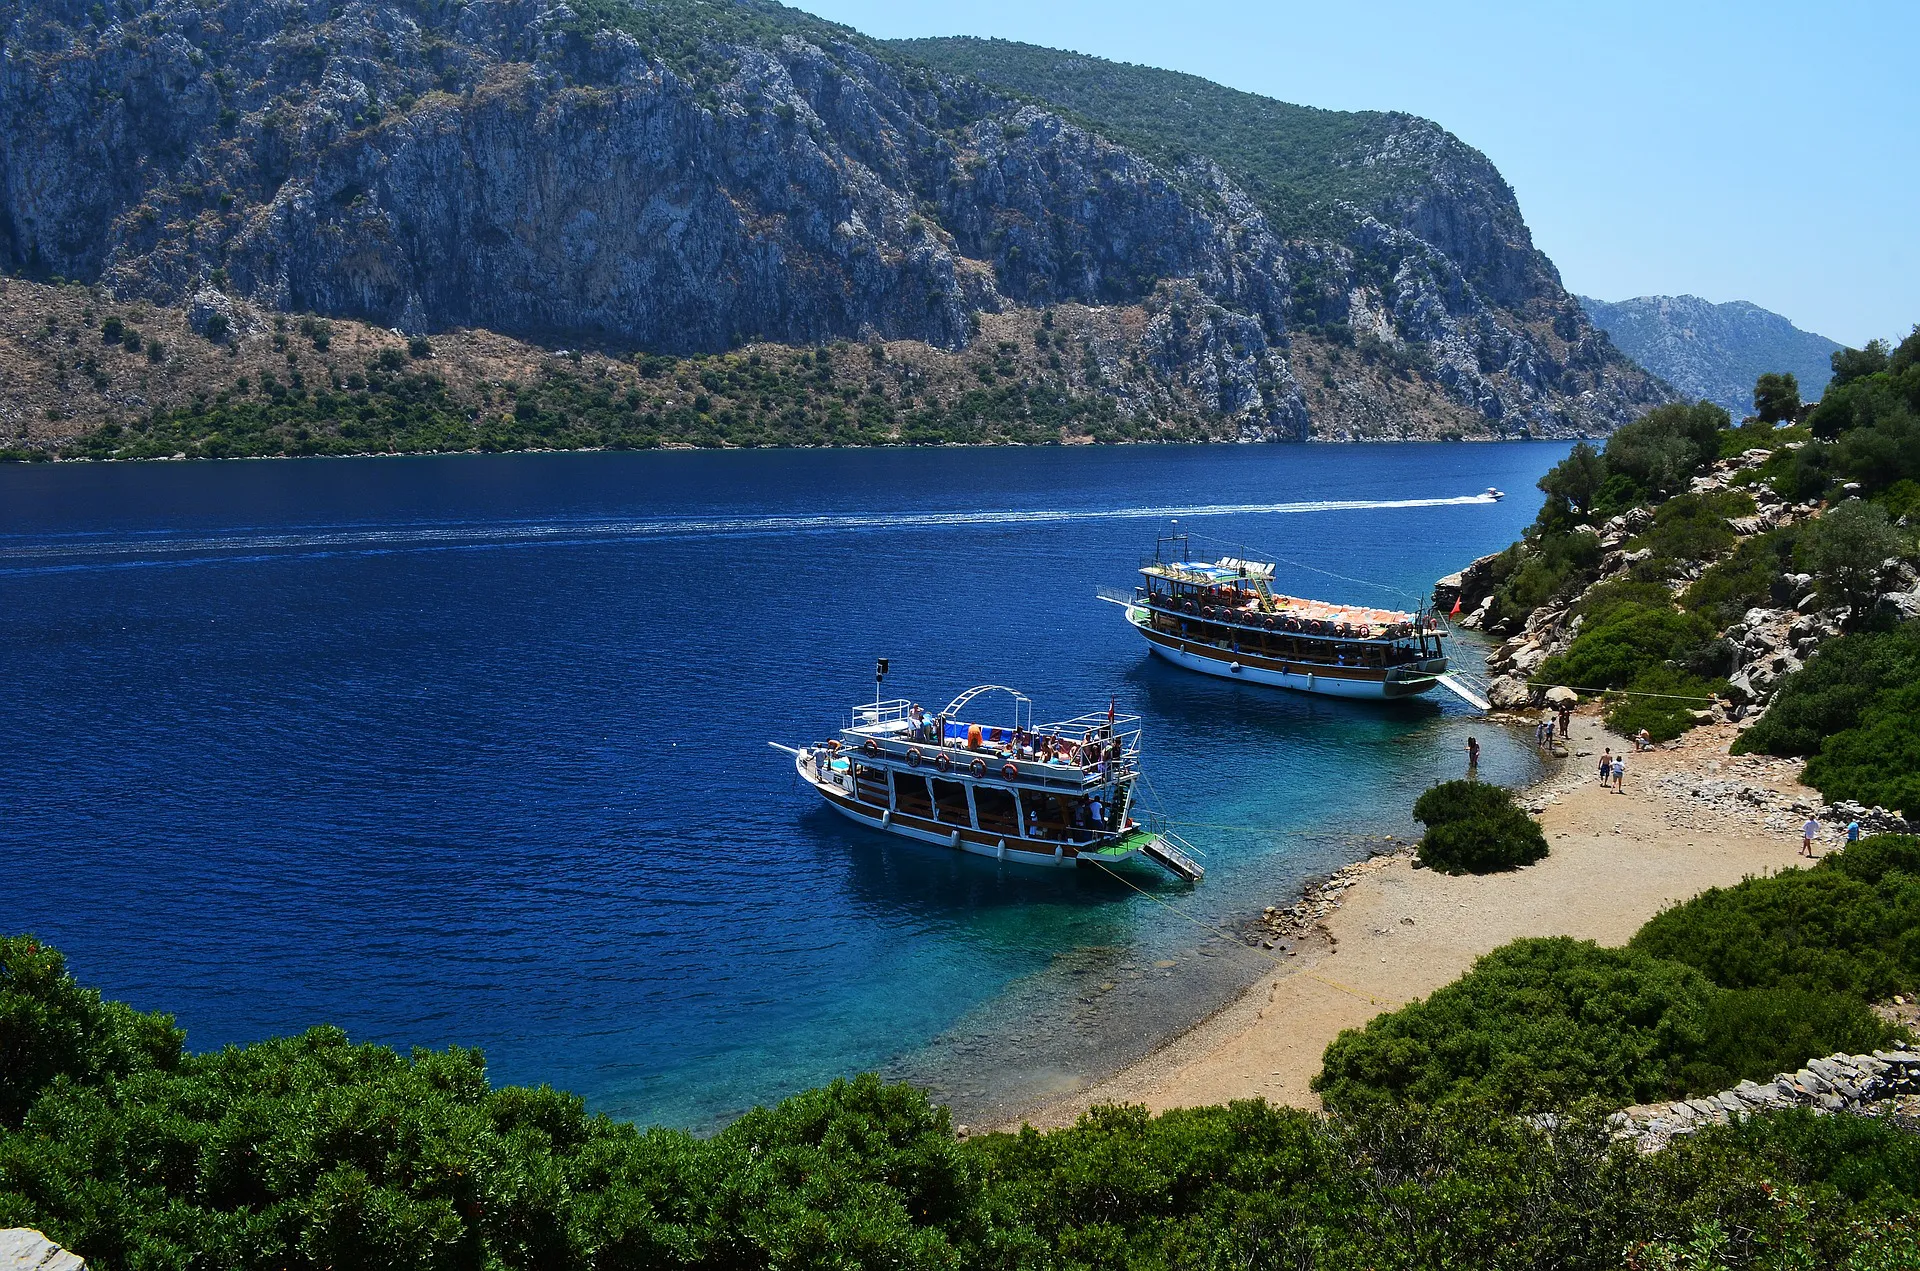 Aegean Islands Boat Tour from Marmaris